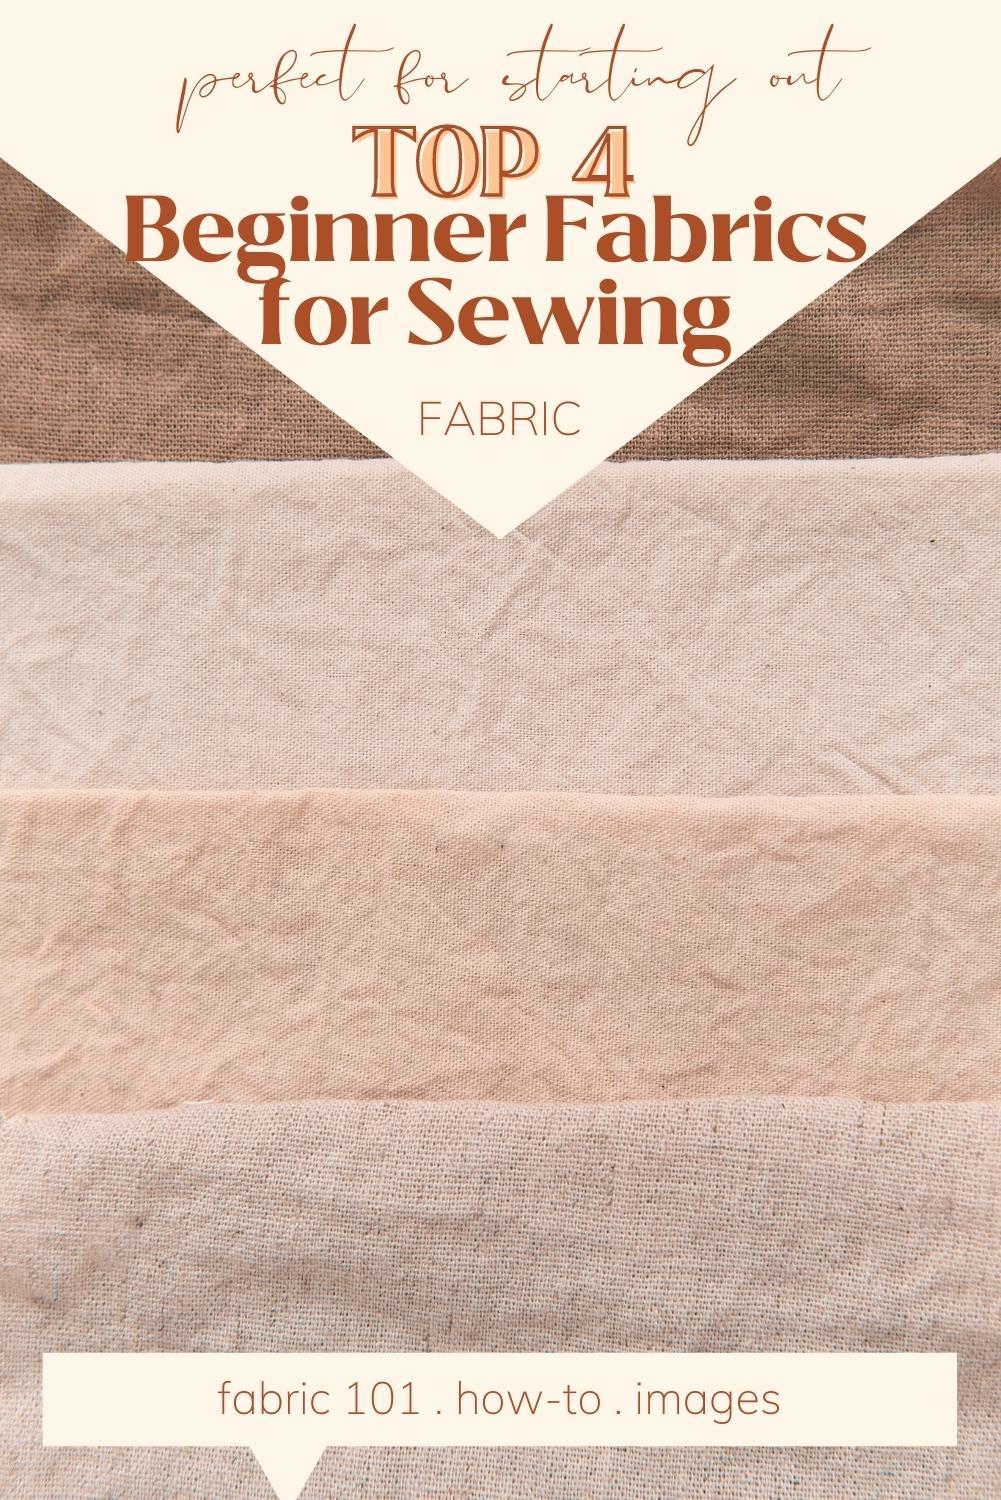 Top 4 Beginner Fabrics to Sew